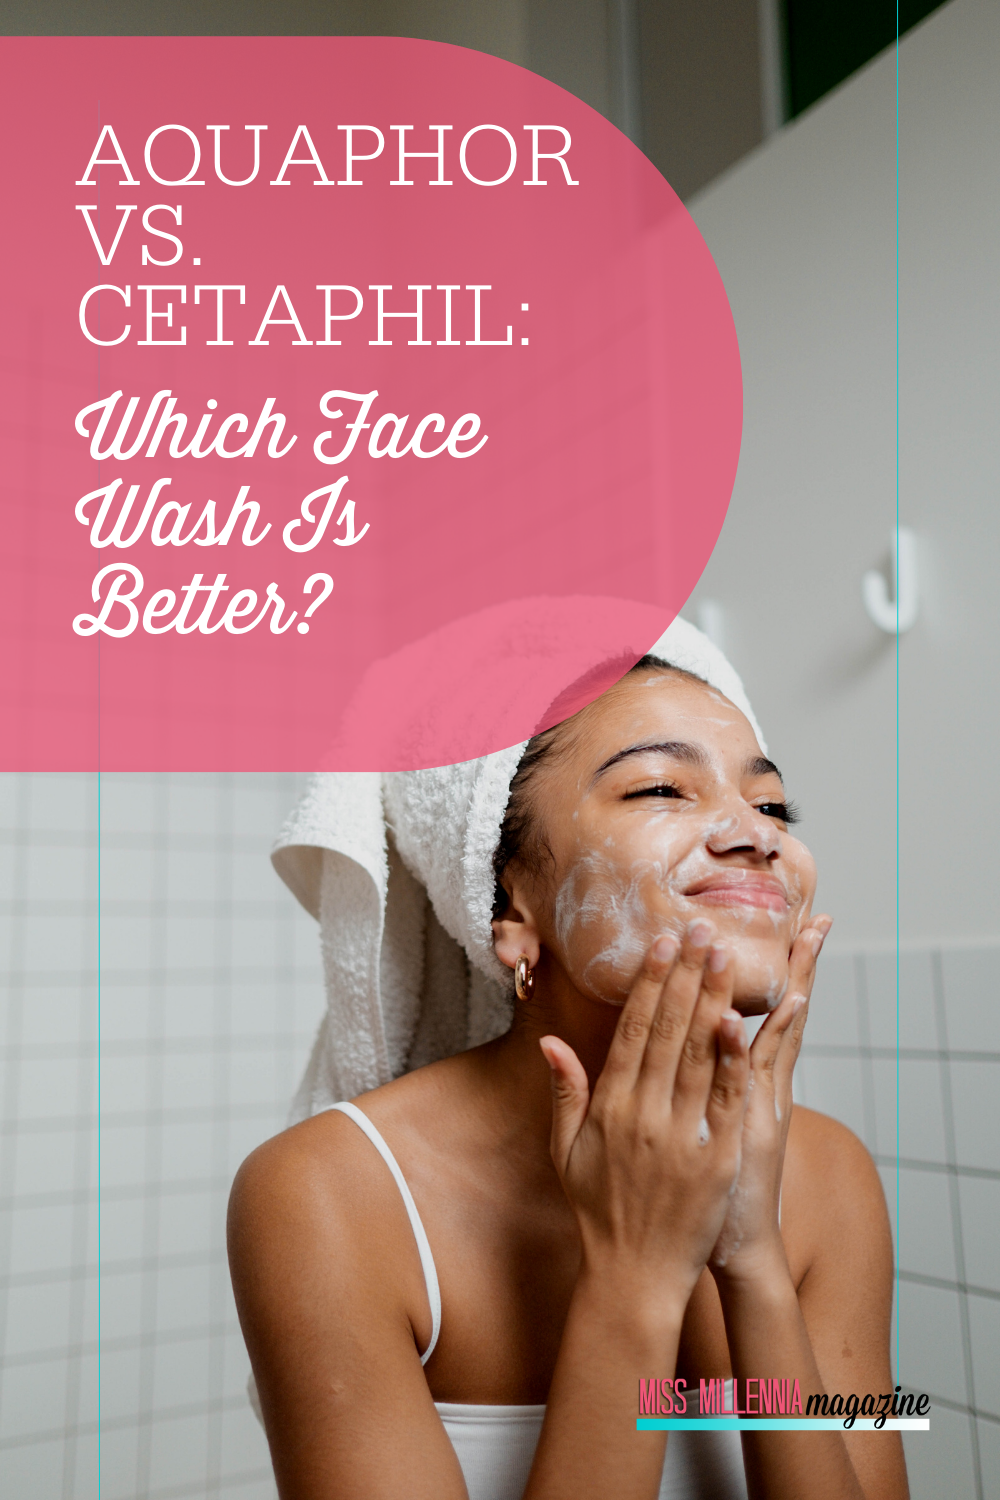 Aquaphor vs. Cetaphil: Which Face Wash Is Better?